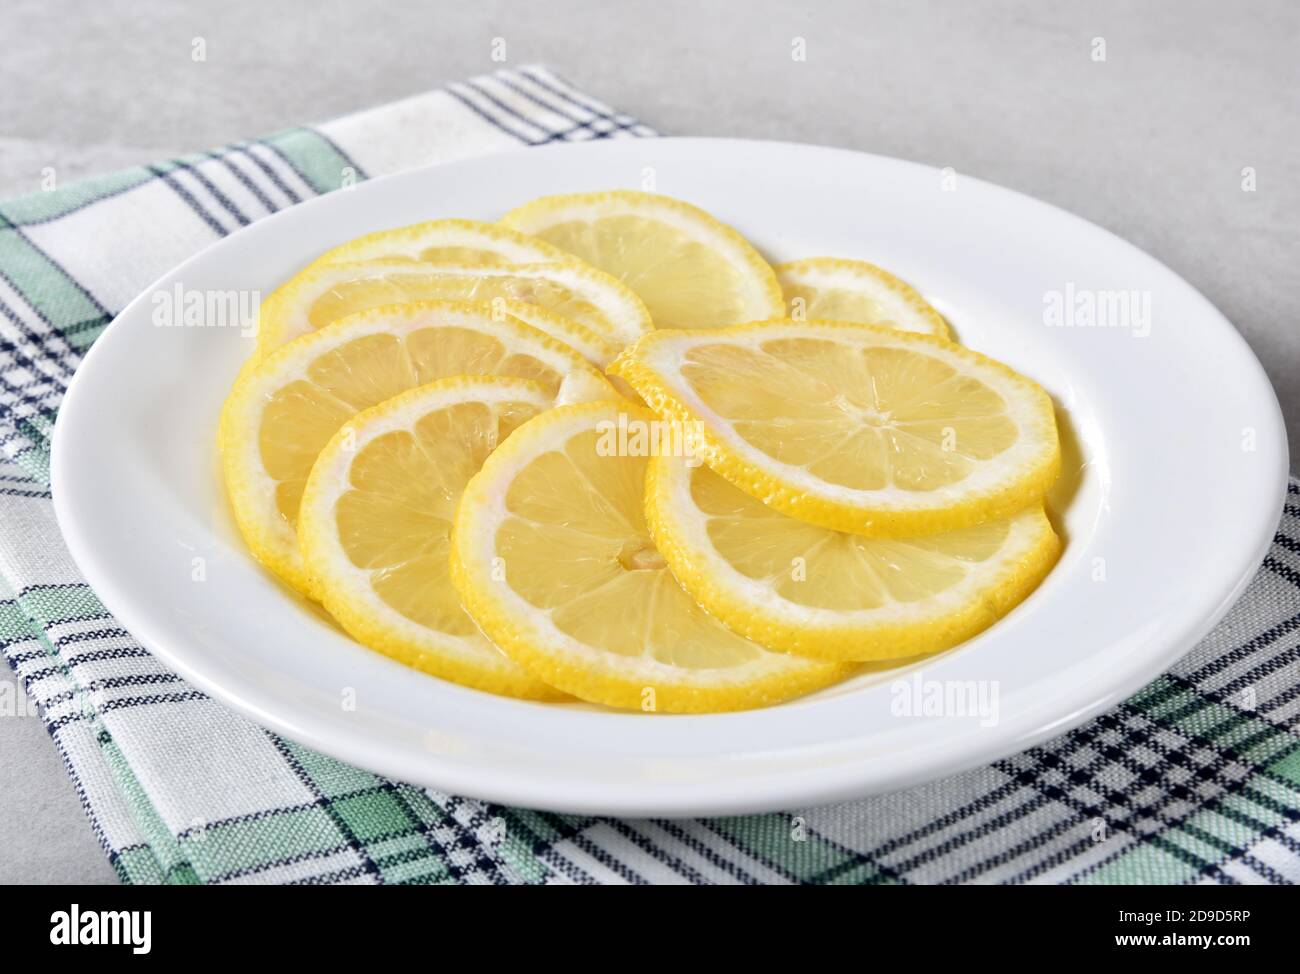 A plate of thin sliced lemon Stock Photo